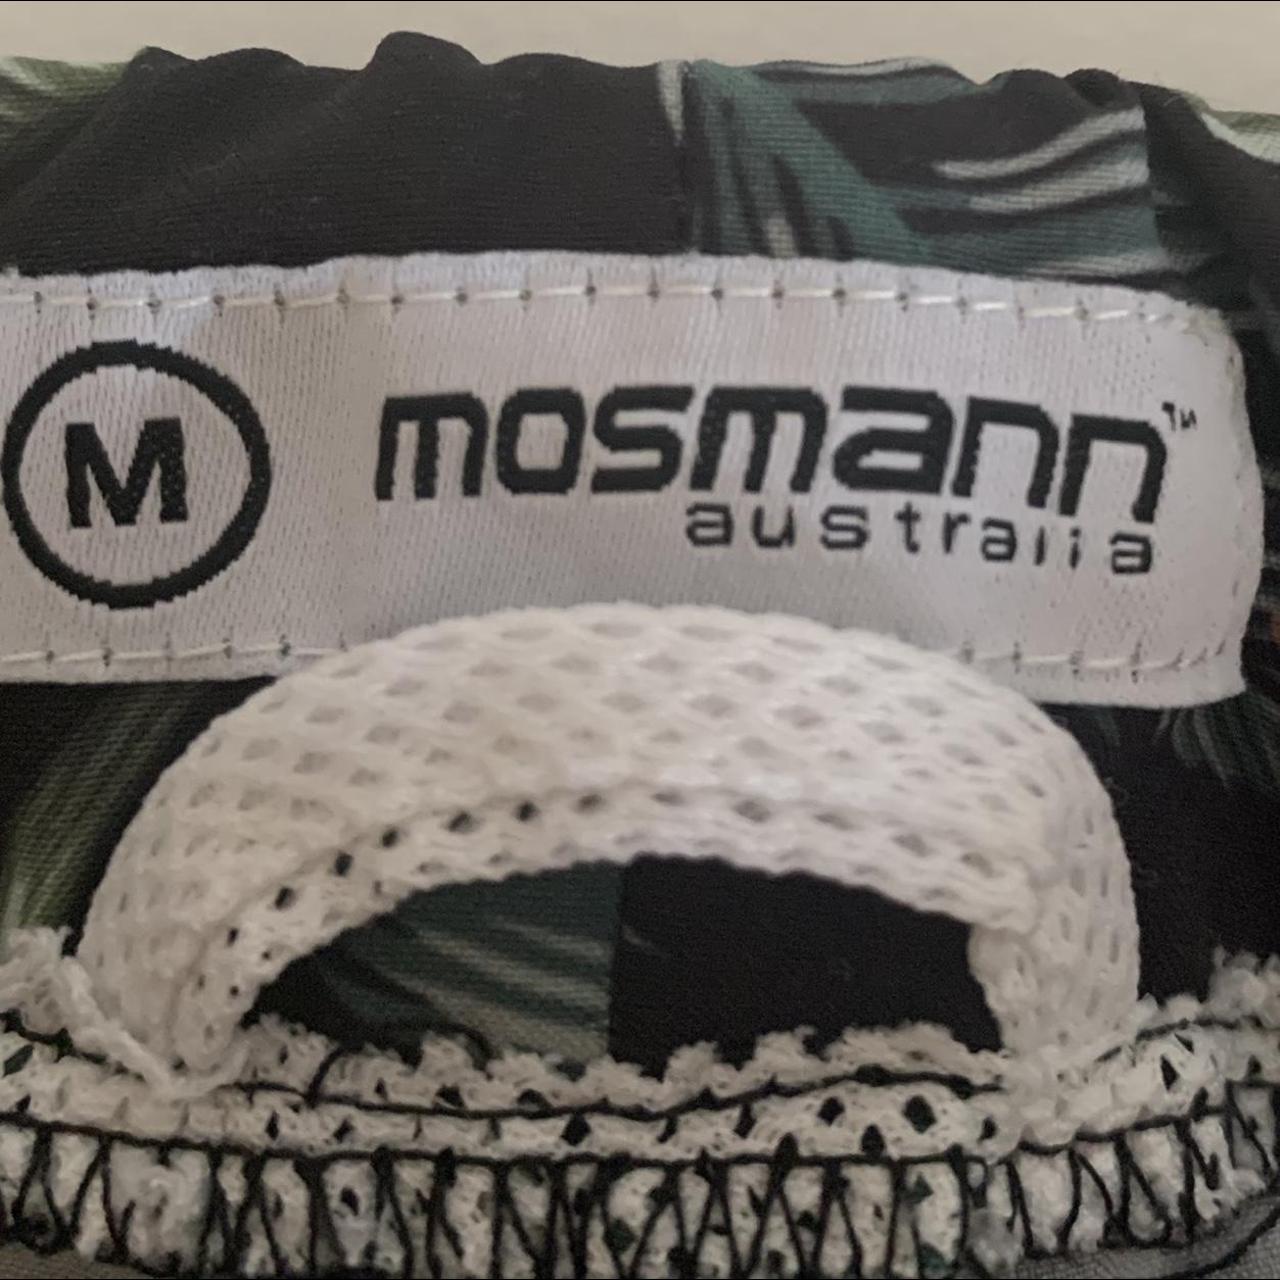 Product Image 4 - Mosmann men’s swim trunks!

-Super stretchy